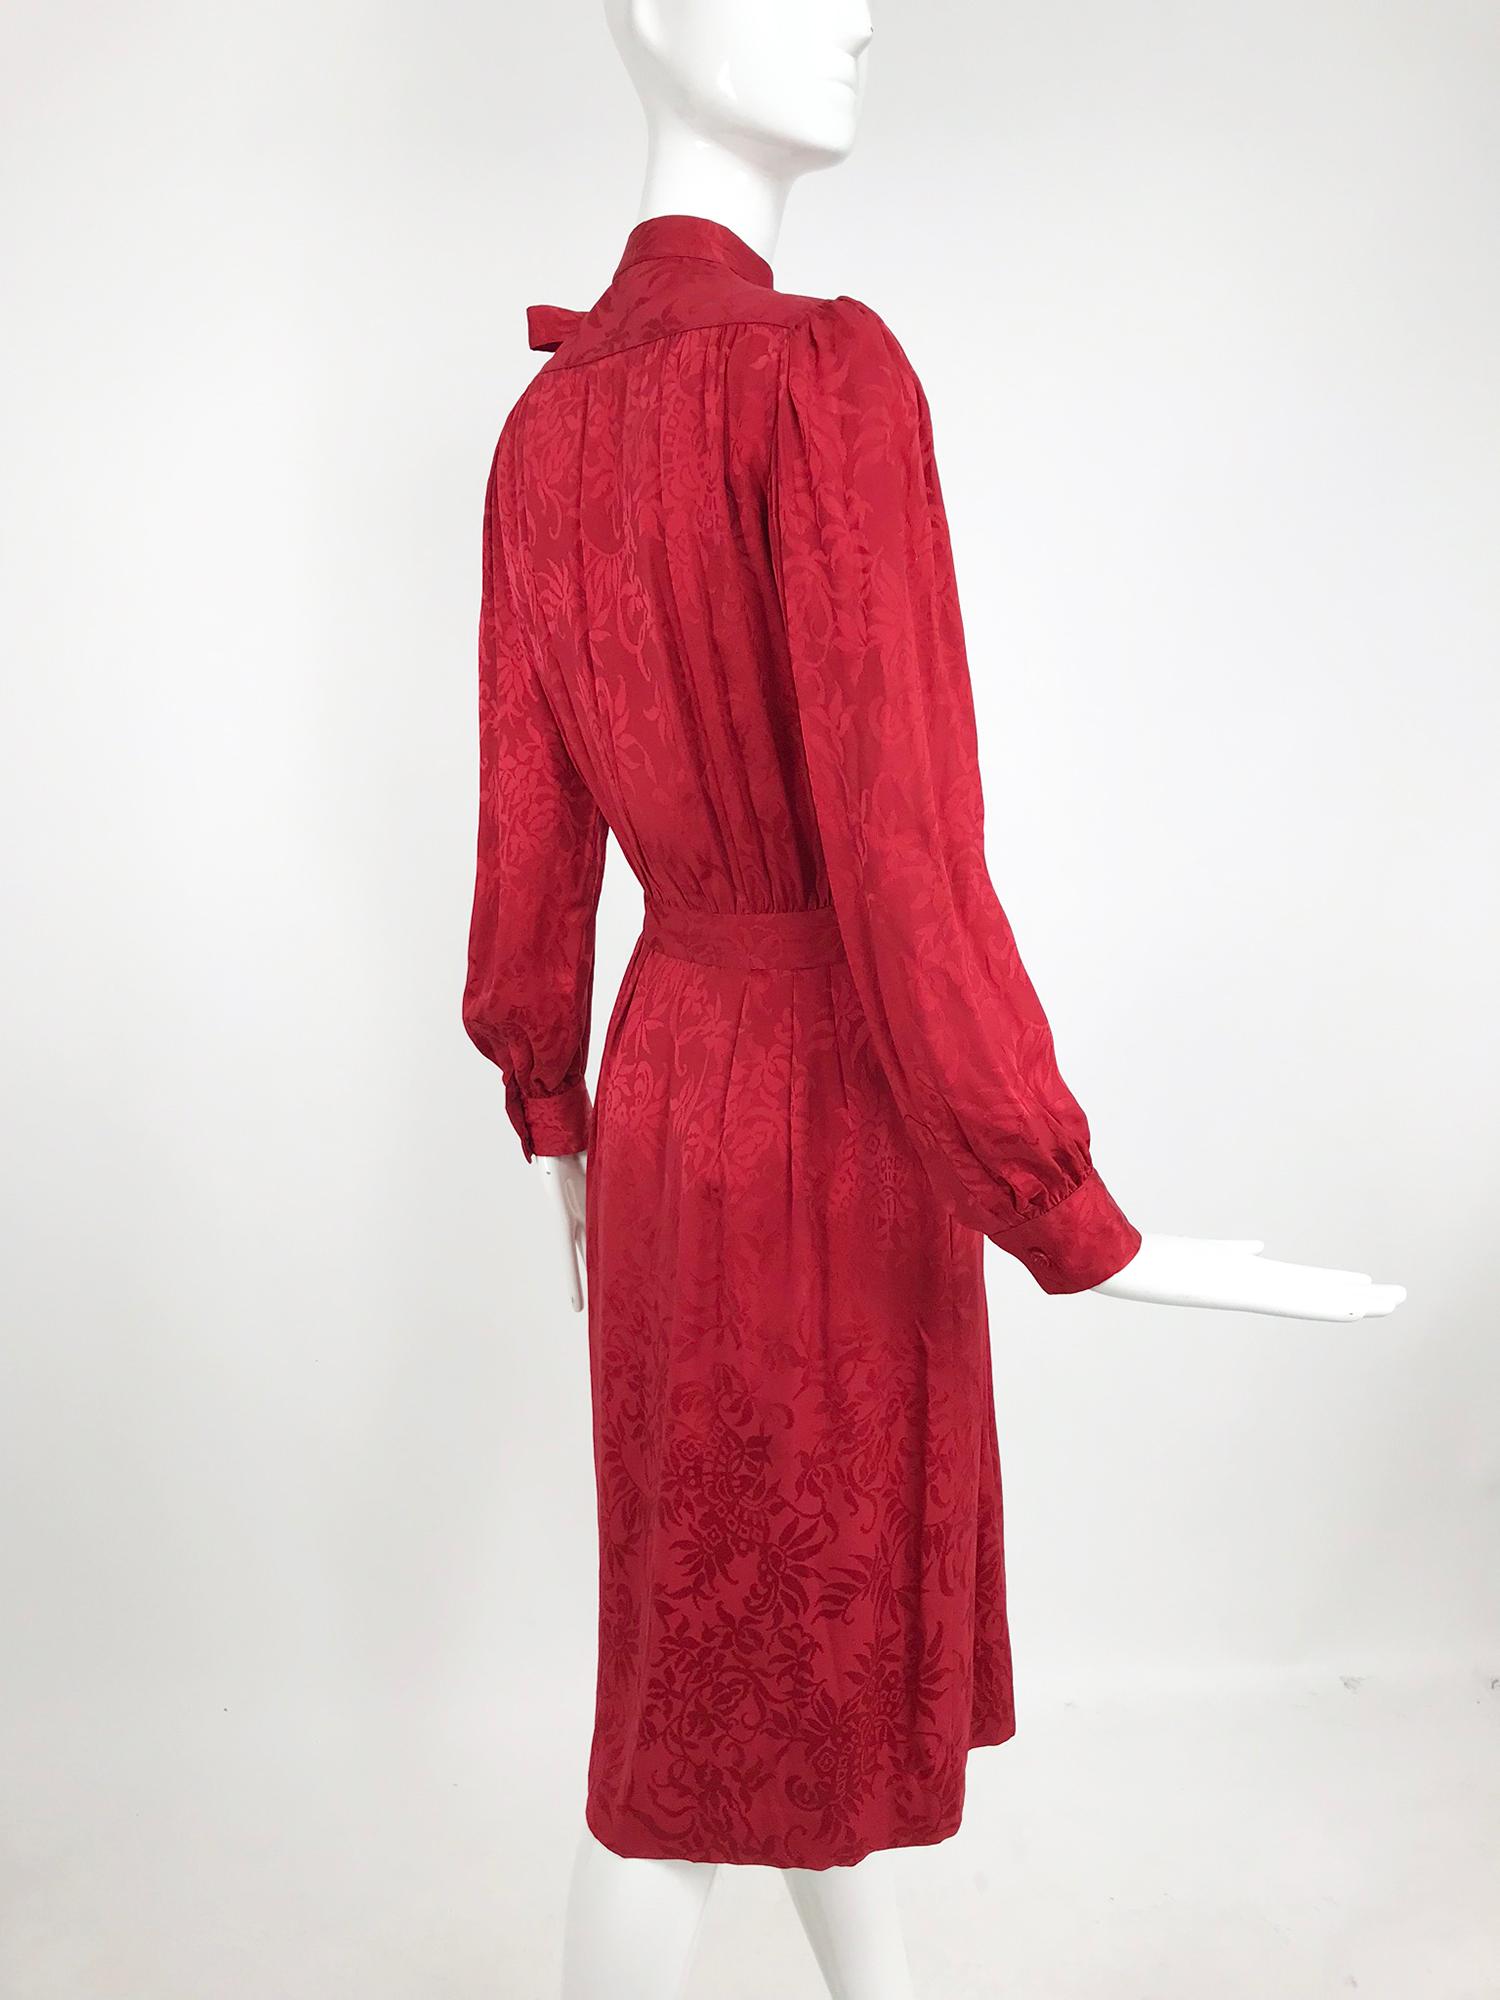 Yves Saint Laurent Red Silk Jacquard Bow Tie Dress 1970s 3